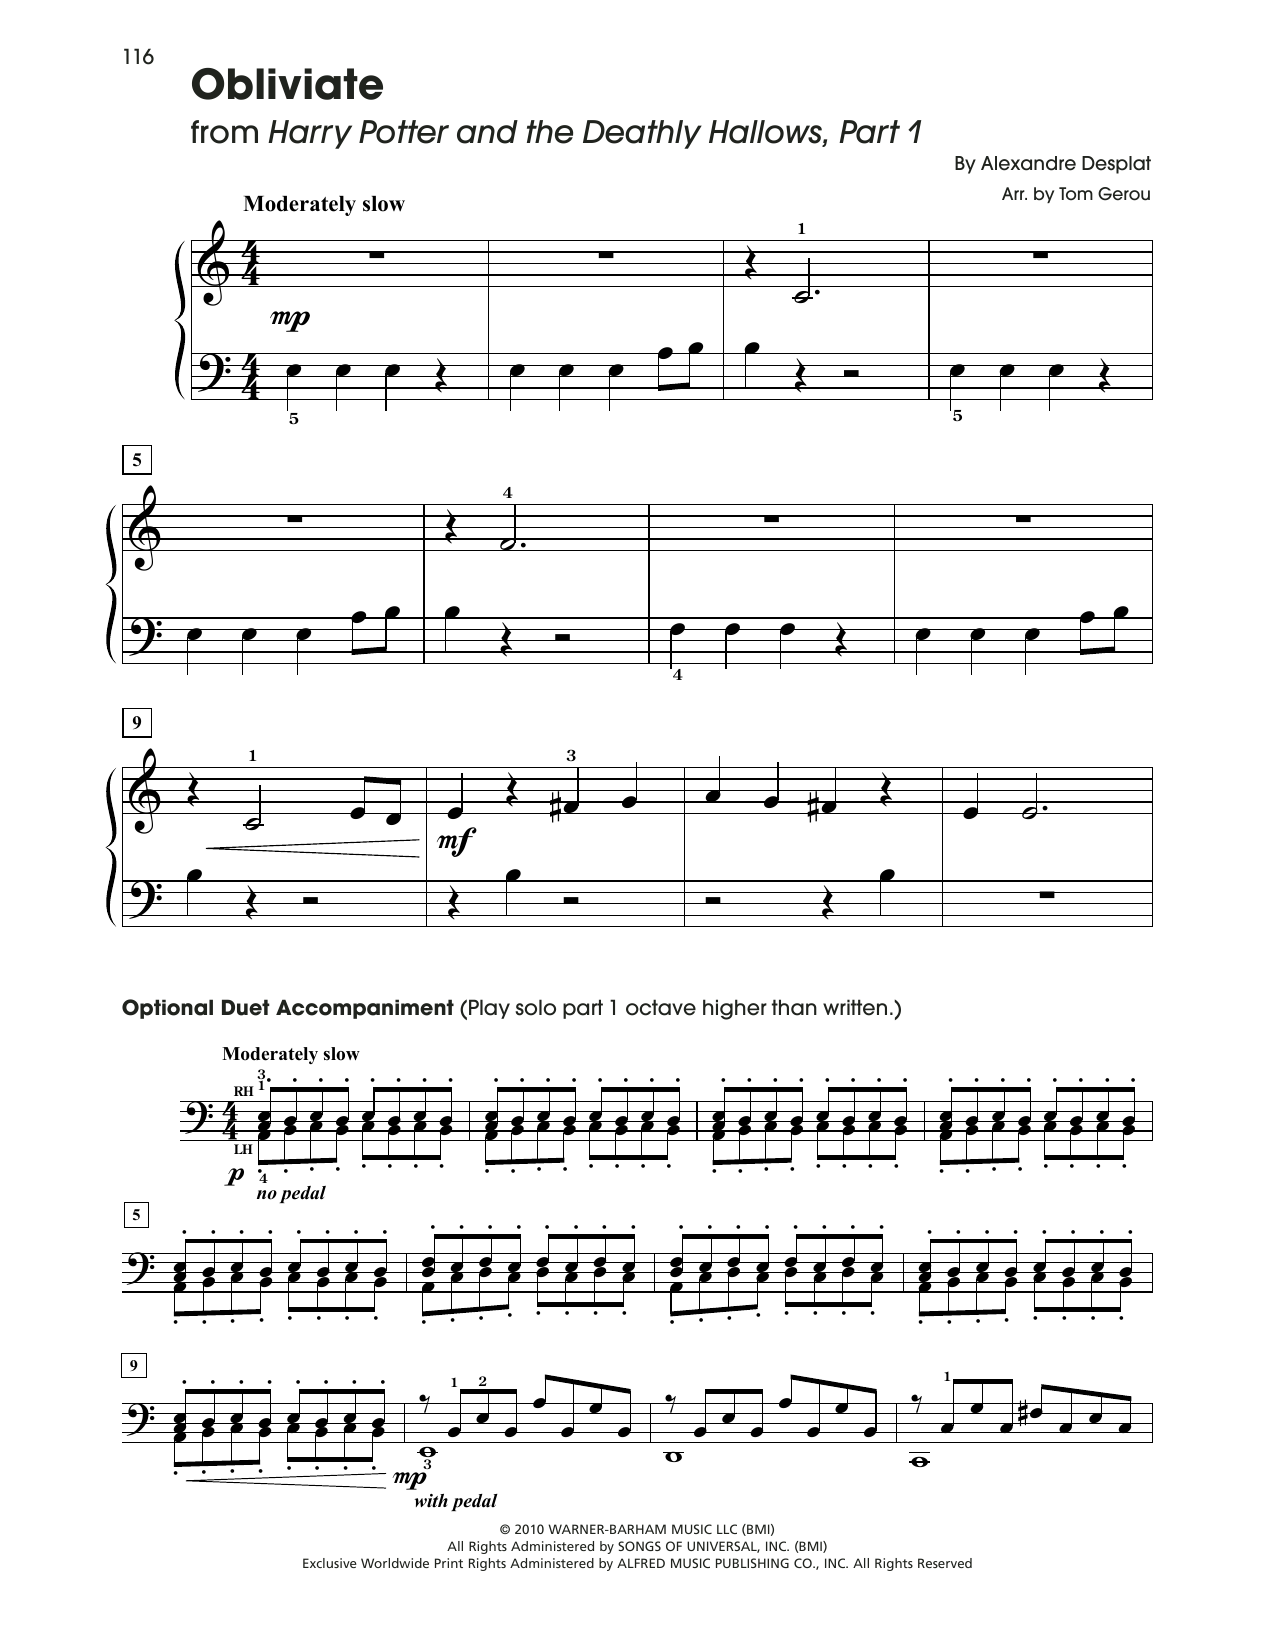 Alexandre Desplat Obliviate (from Harry Potter) (arr. Tom Gerou) Sheet Music Notes & Chords for 5-Finger Piano - Download or Print PDF